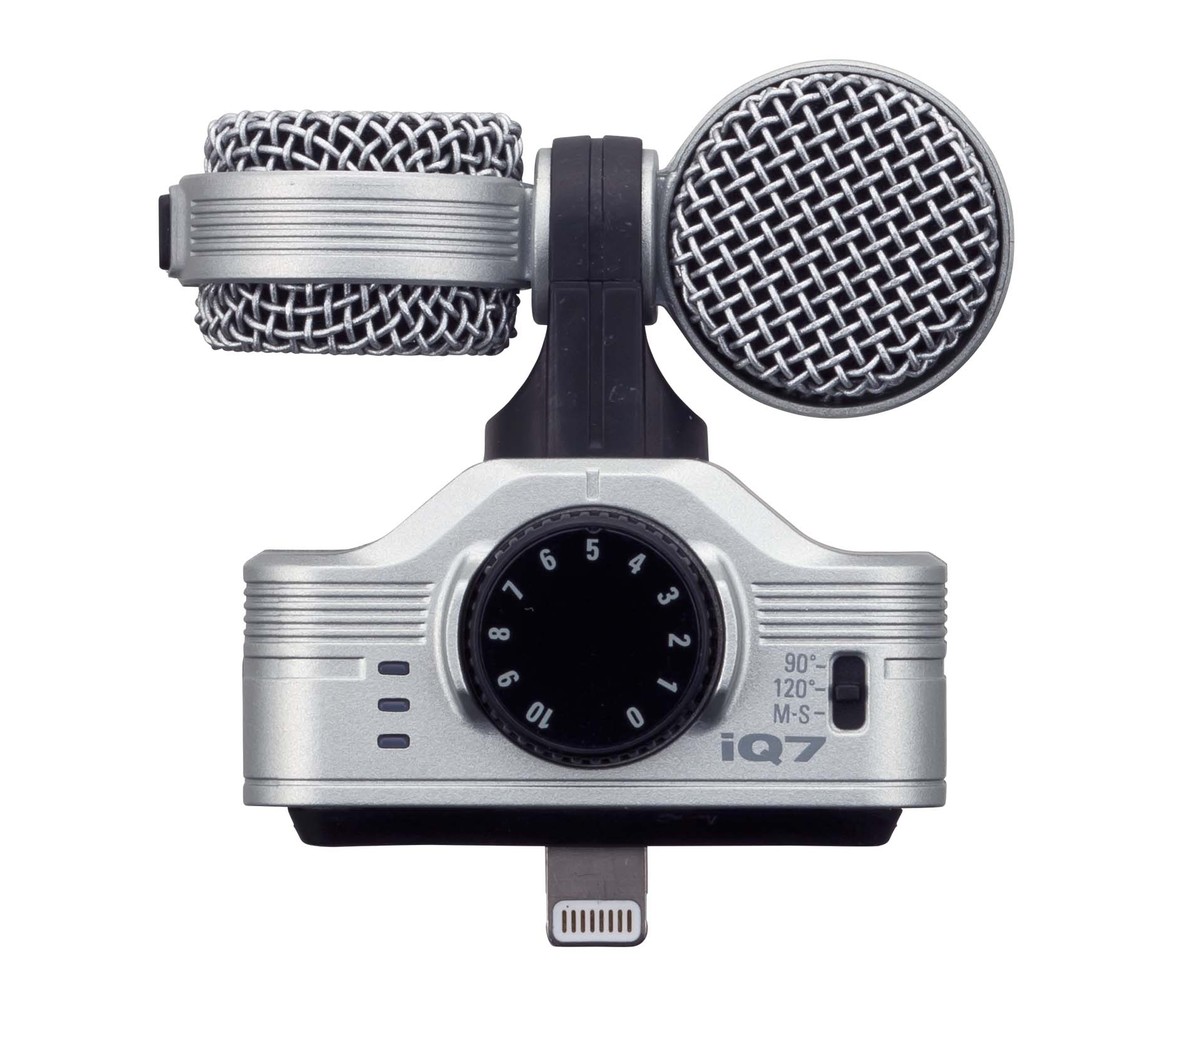 Zoom iQ7 MS Stereo Mikrofon für iPhone und iPad